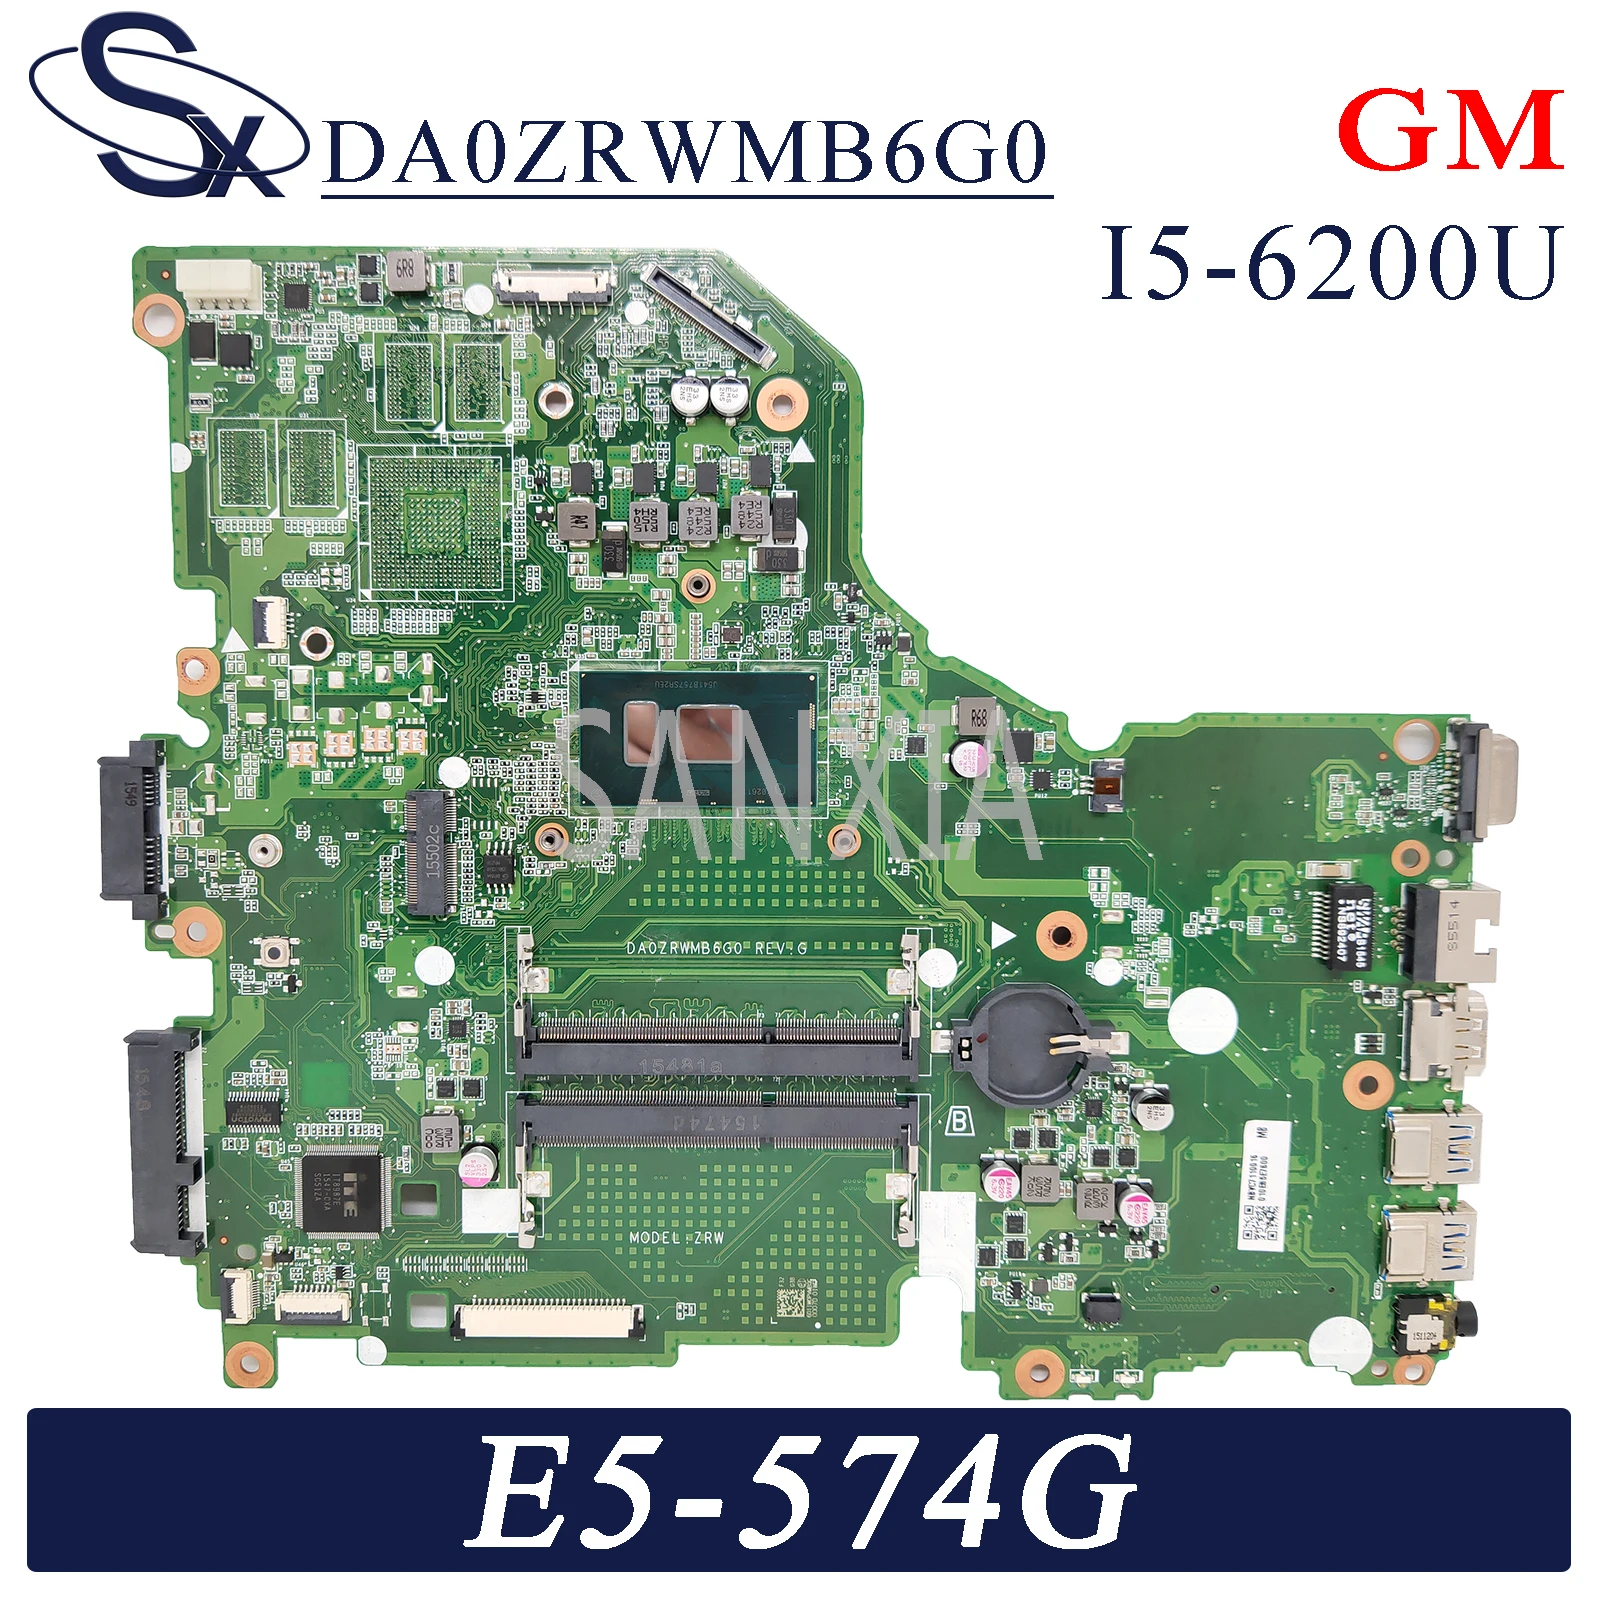 KEFU DA0ZRWMB6G0 de la placa base del ordenador Portátil para Acer Aspire E5-574G original de la placa base I5-6200U CPU GM 0